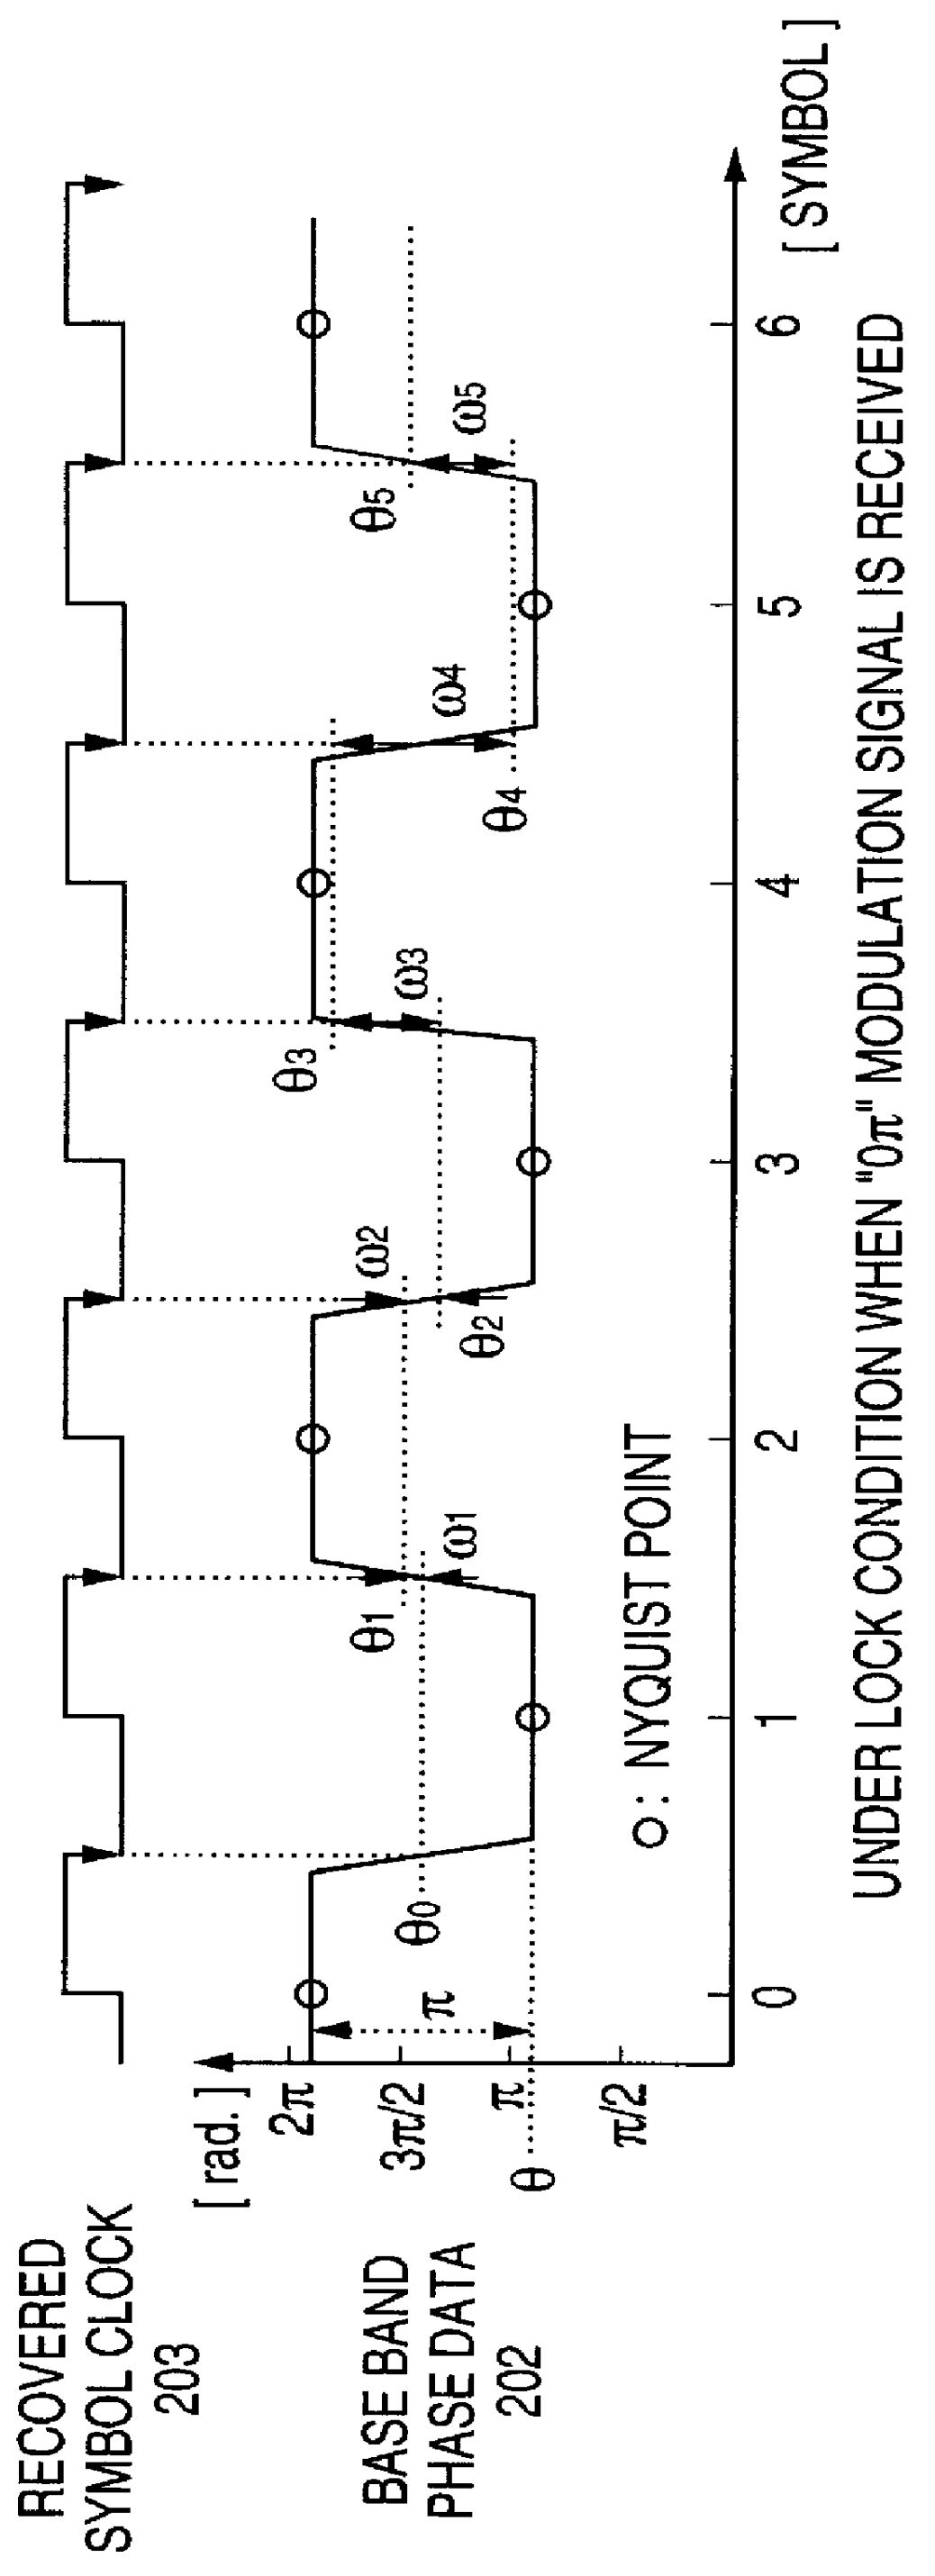 Timing phase synchronization detecting circuit and demodulator